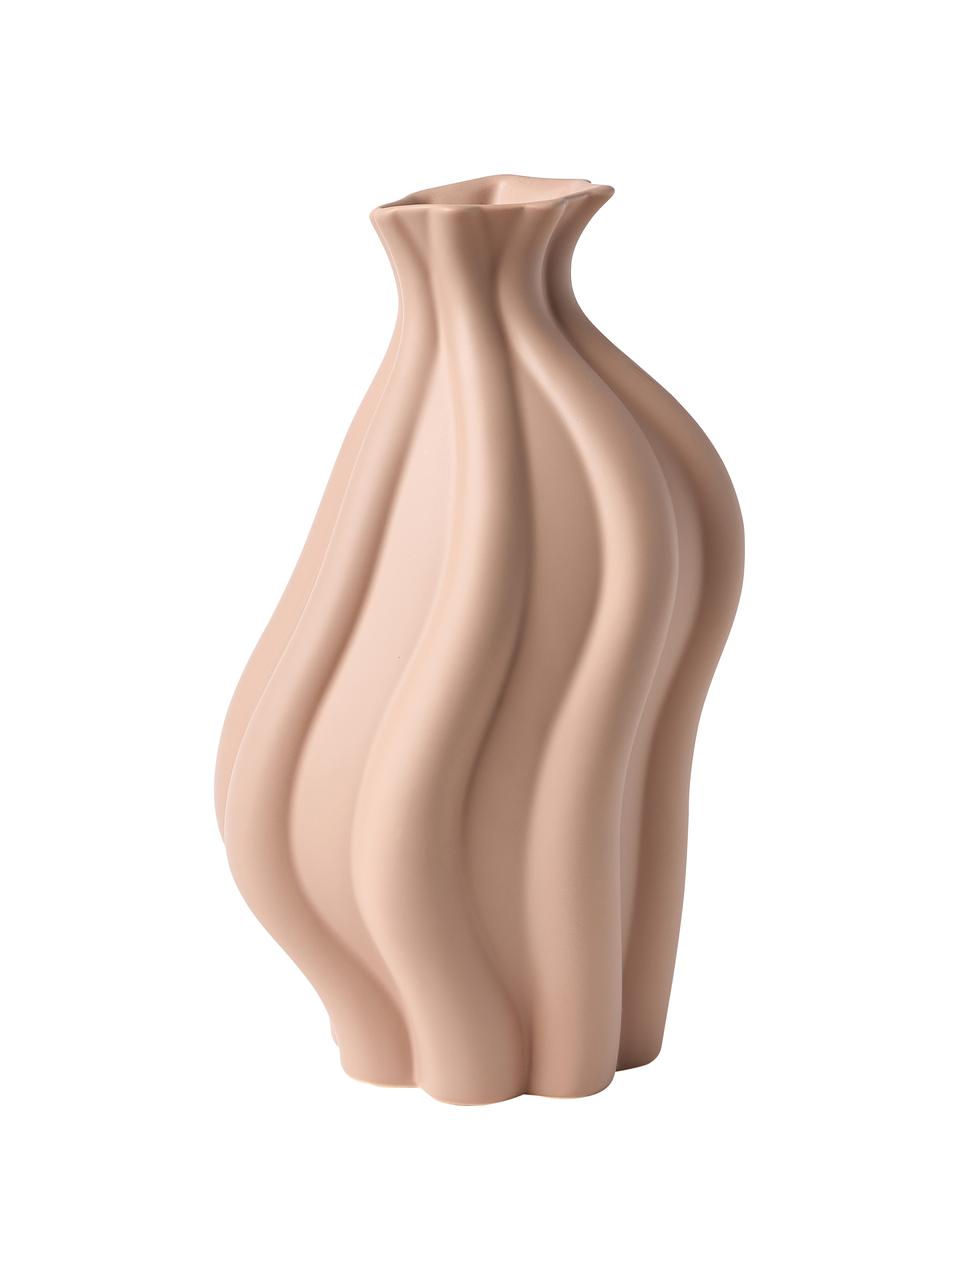 Vase Blom aus Keramik, Keramik, Lachsfarben, H 33 cm